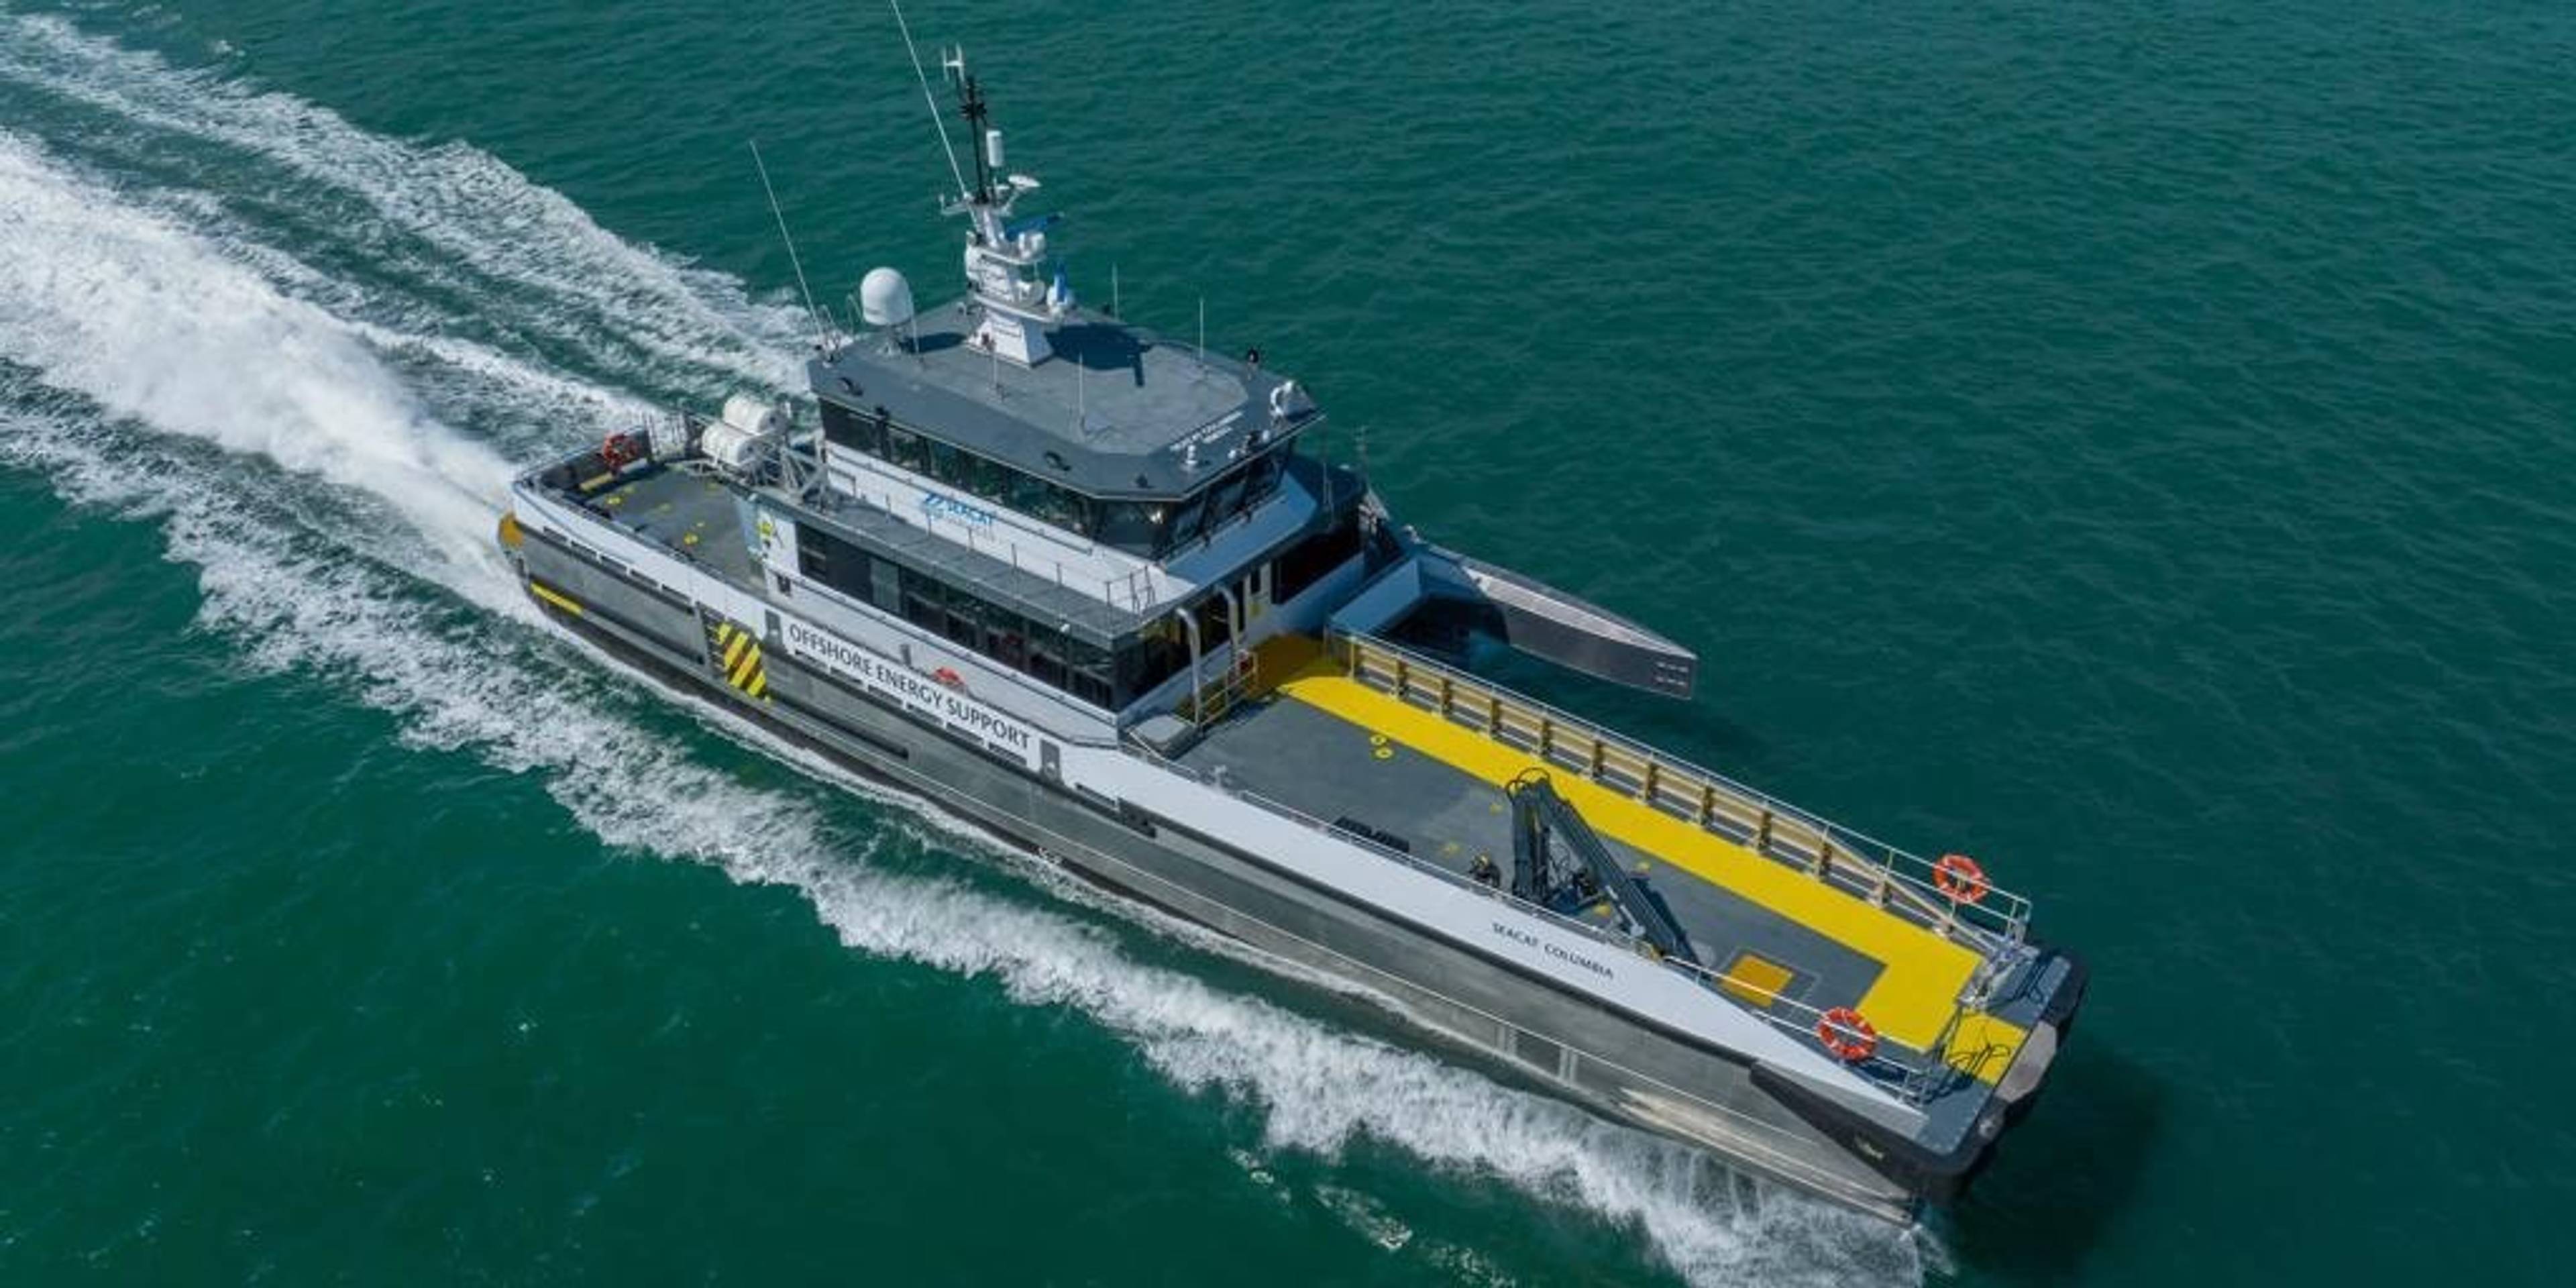 Seacat Columbia crew transfer vessel